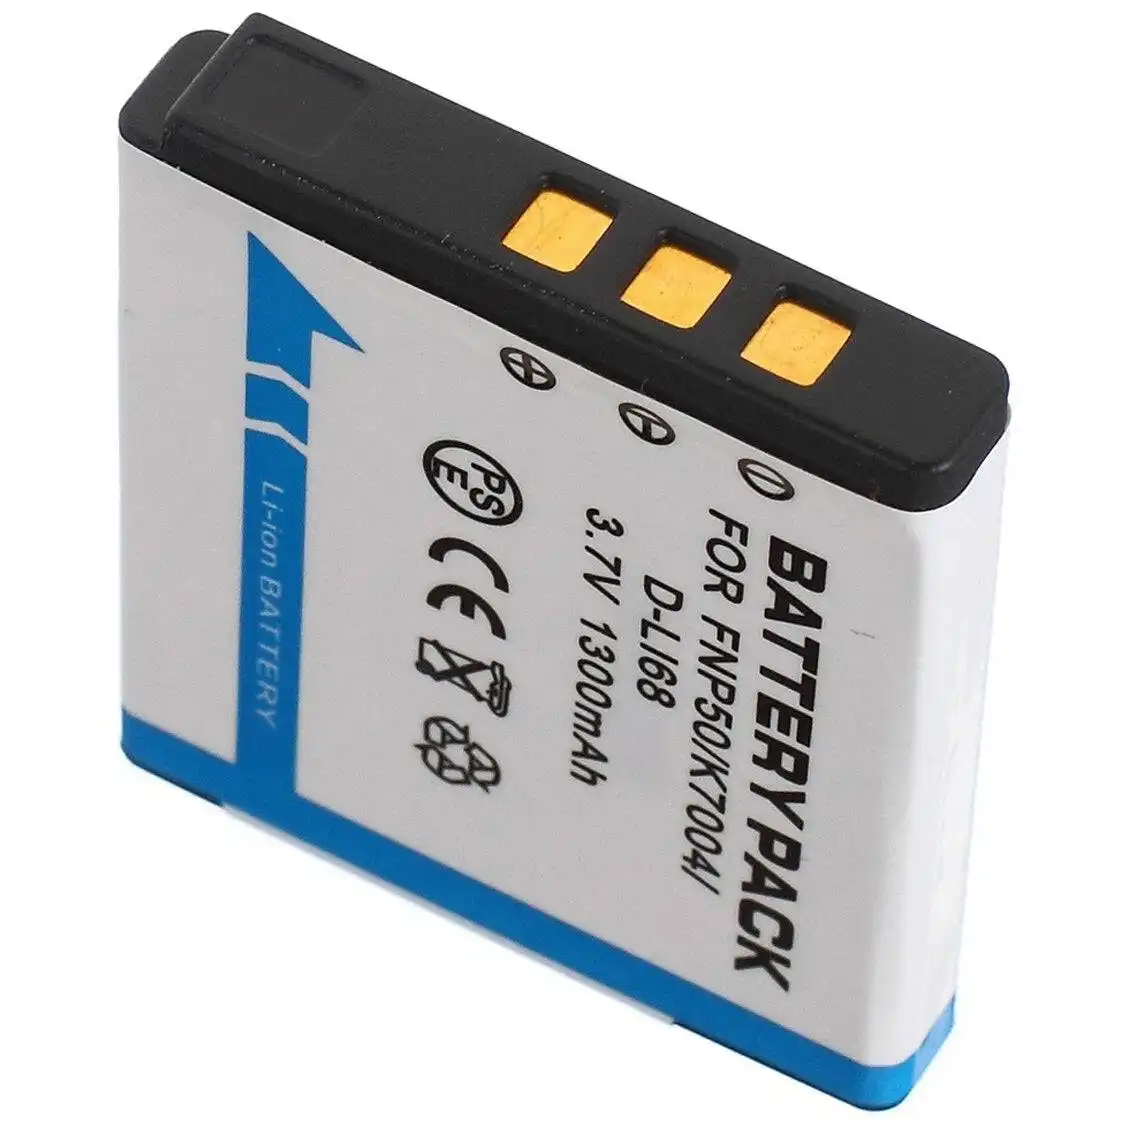 NP-50 NP-50A Battery for Fujifilm FinePix XP200 X10 X20 XF1 -1400mAh Hi Capacity